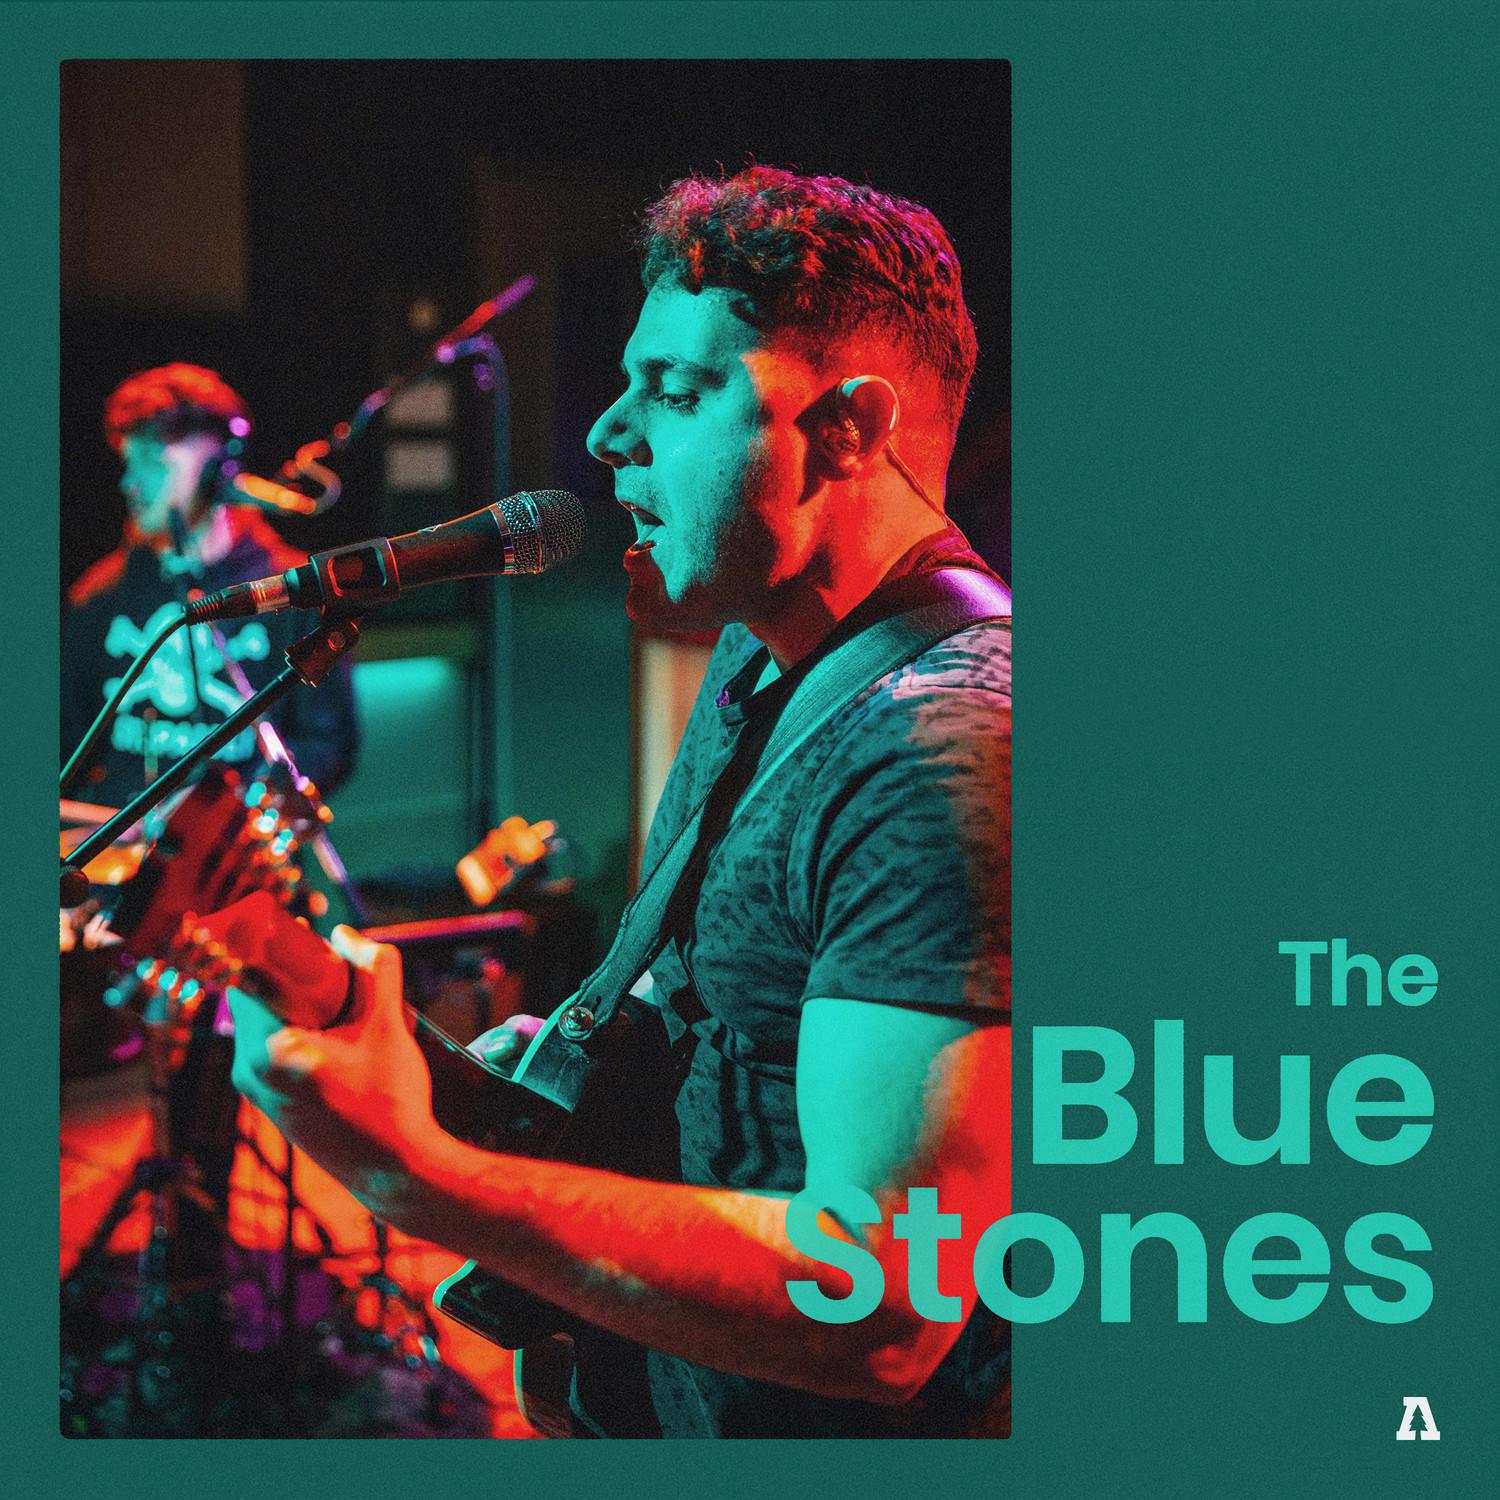 The Blue Stones - Magic (Audiotree Live Version)